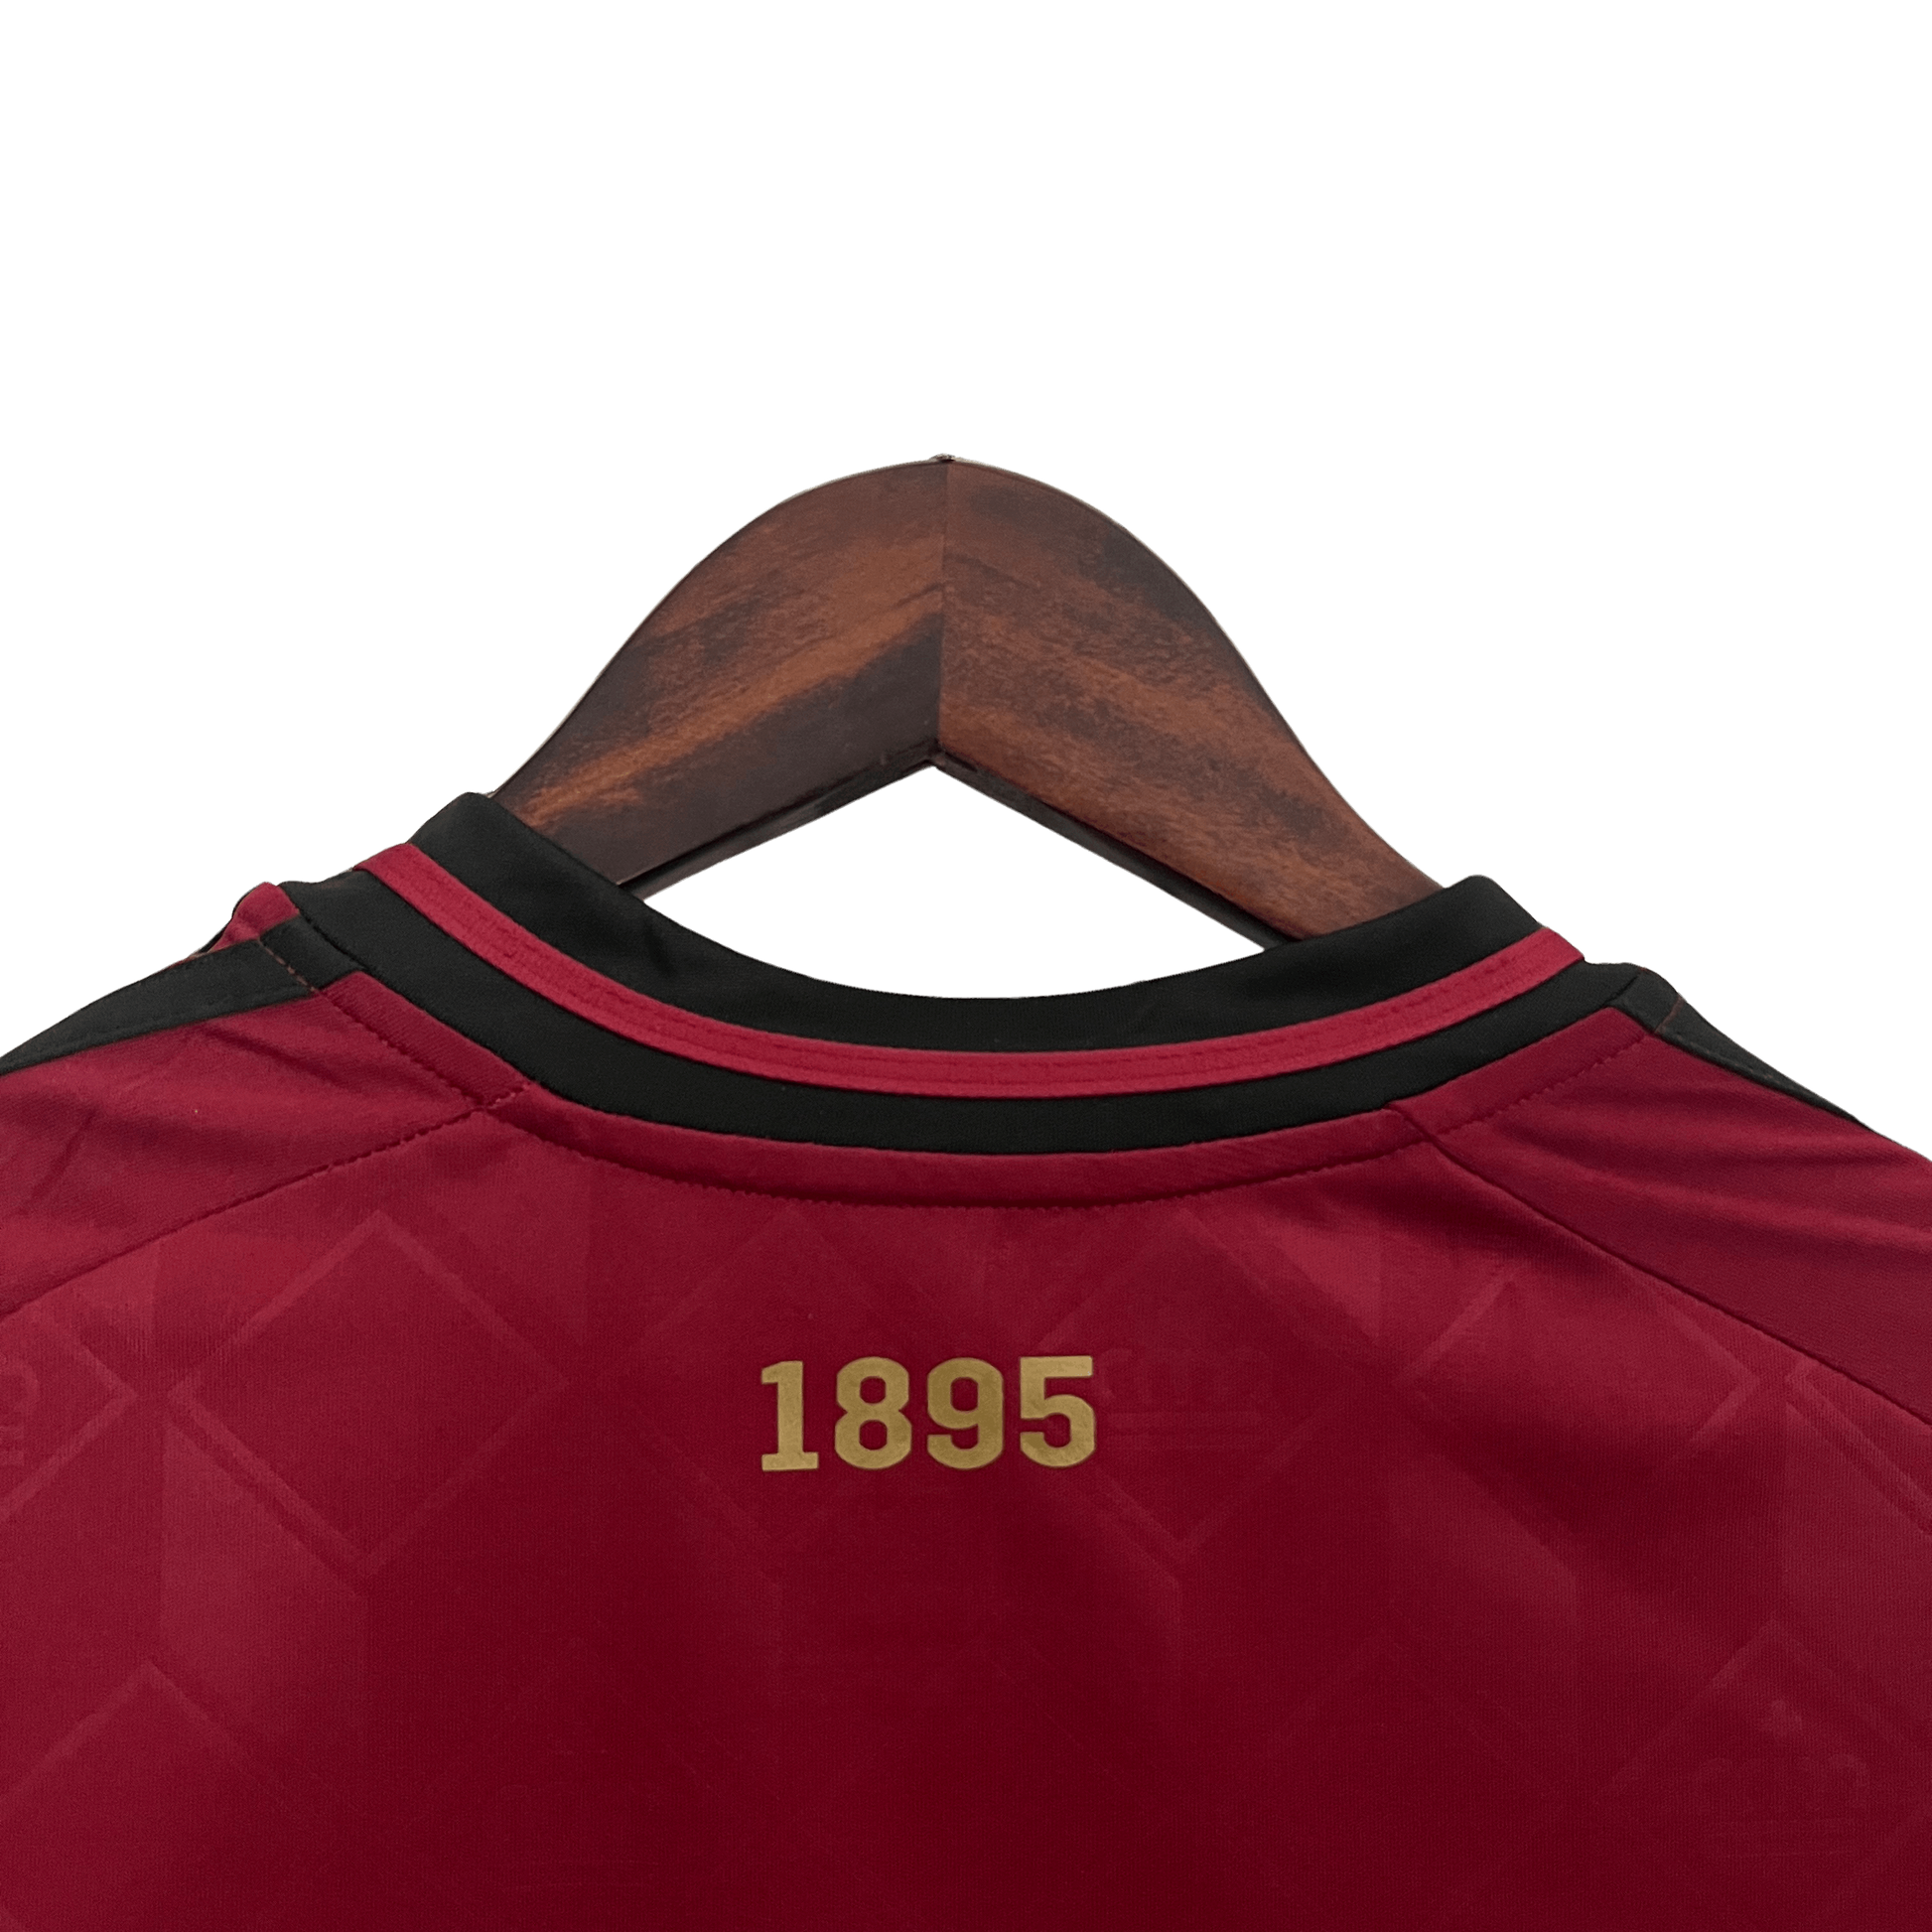 Belgium EURO 2024 Home kit – Fan Version - Back